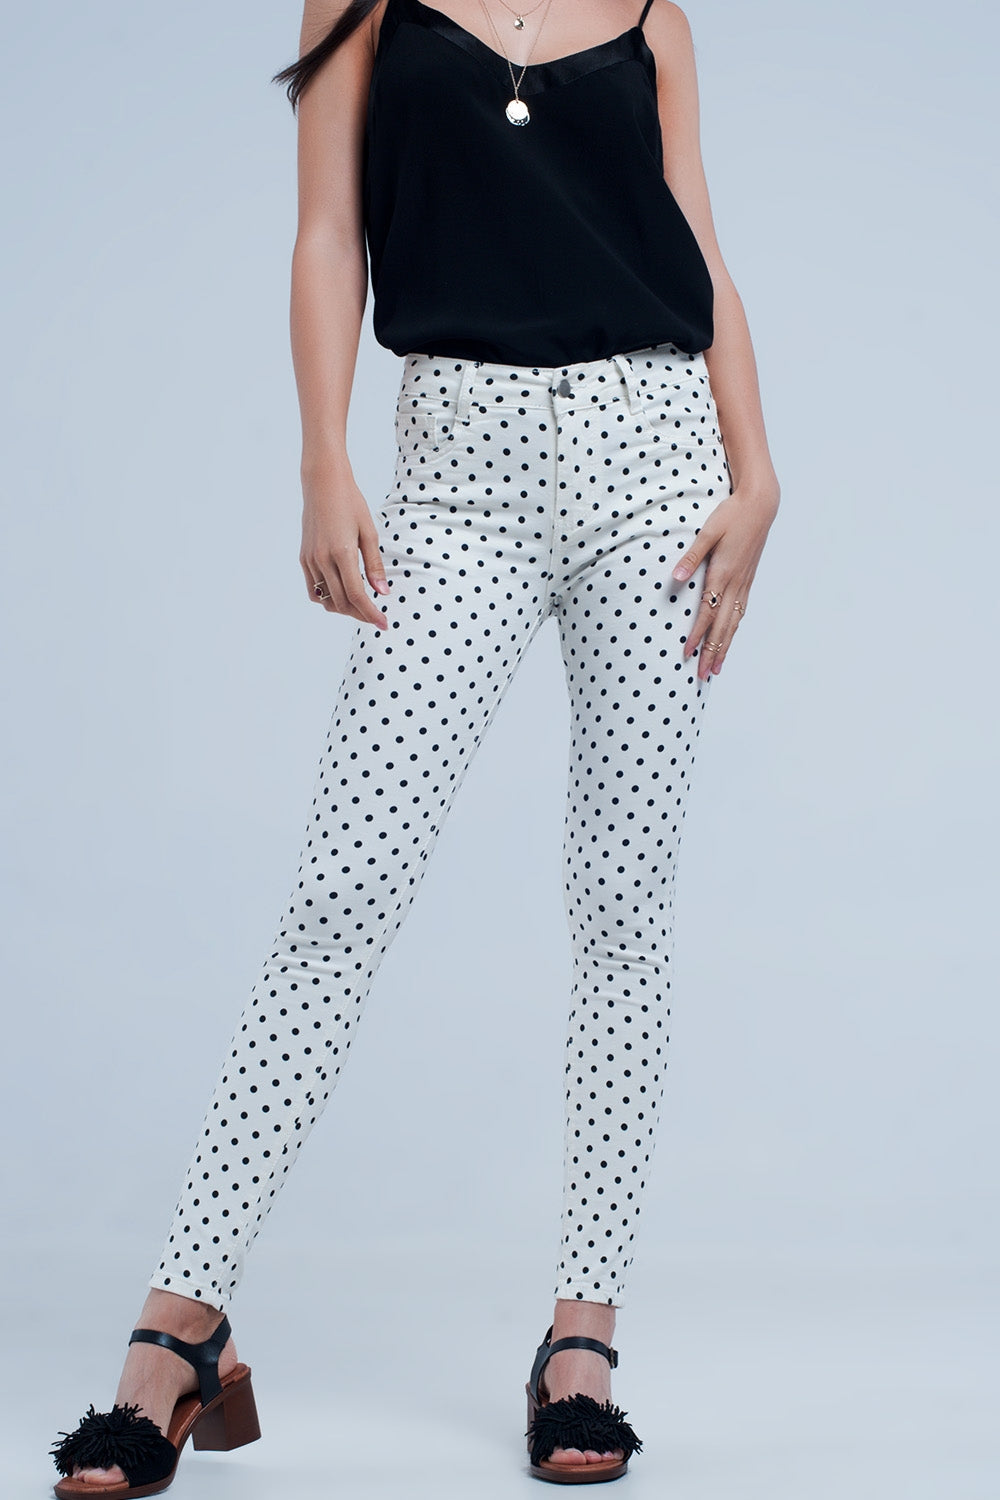 Q2 White jeans in polka dots